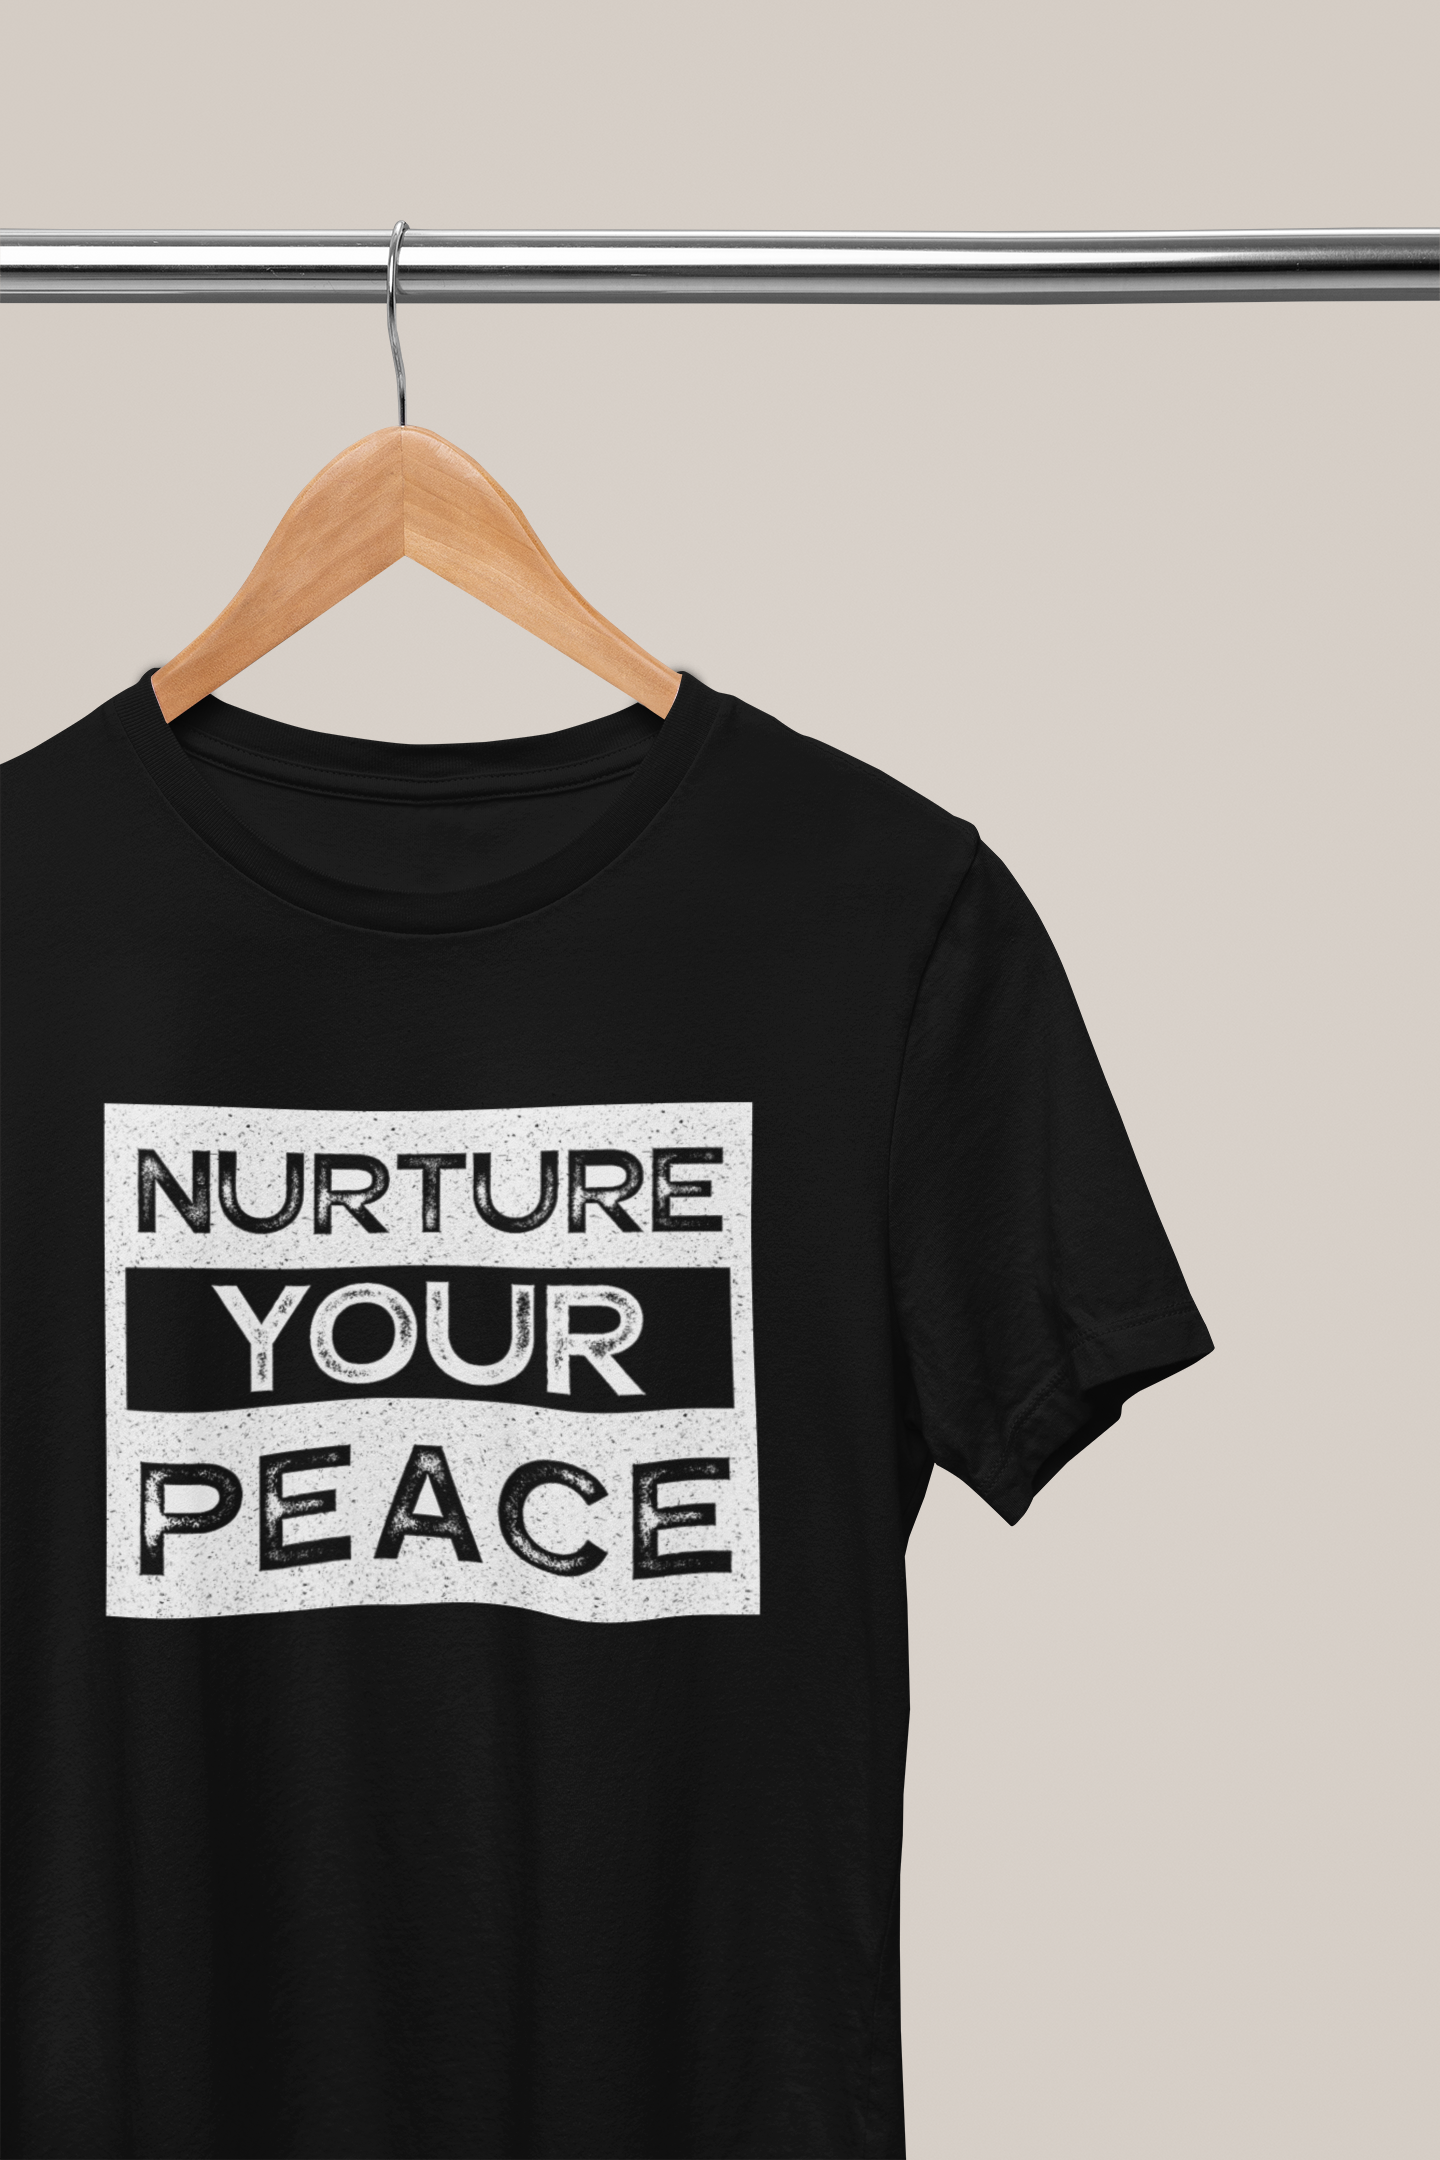 Nurture Your Peace, Hoodies, Sweatshirts, Tees, and Mugs